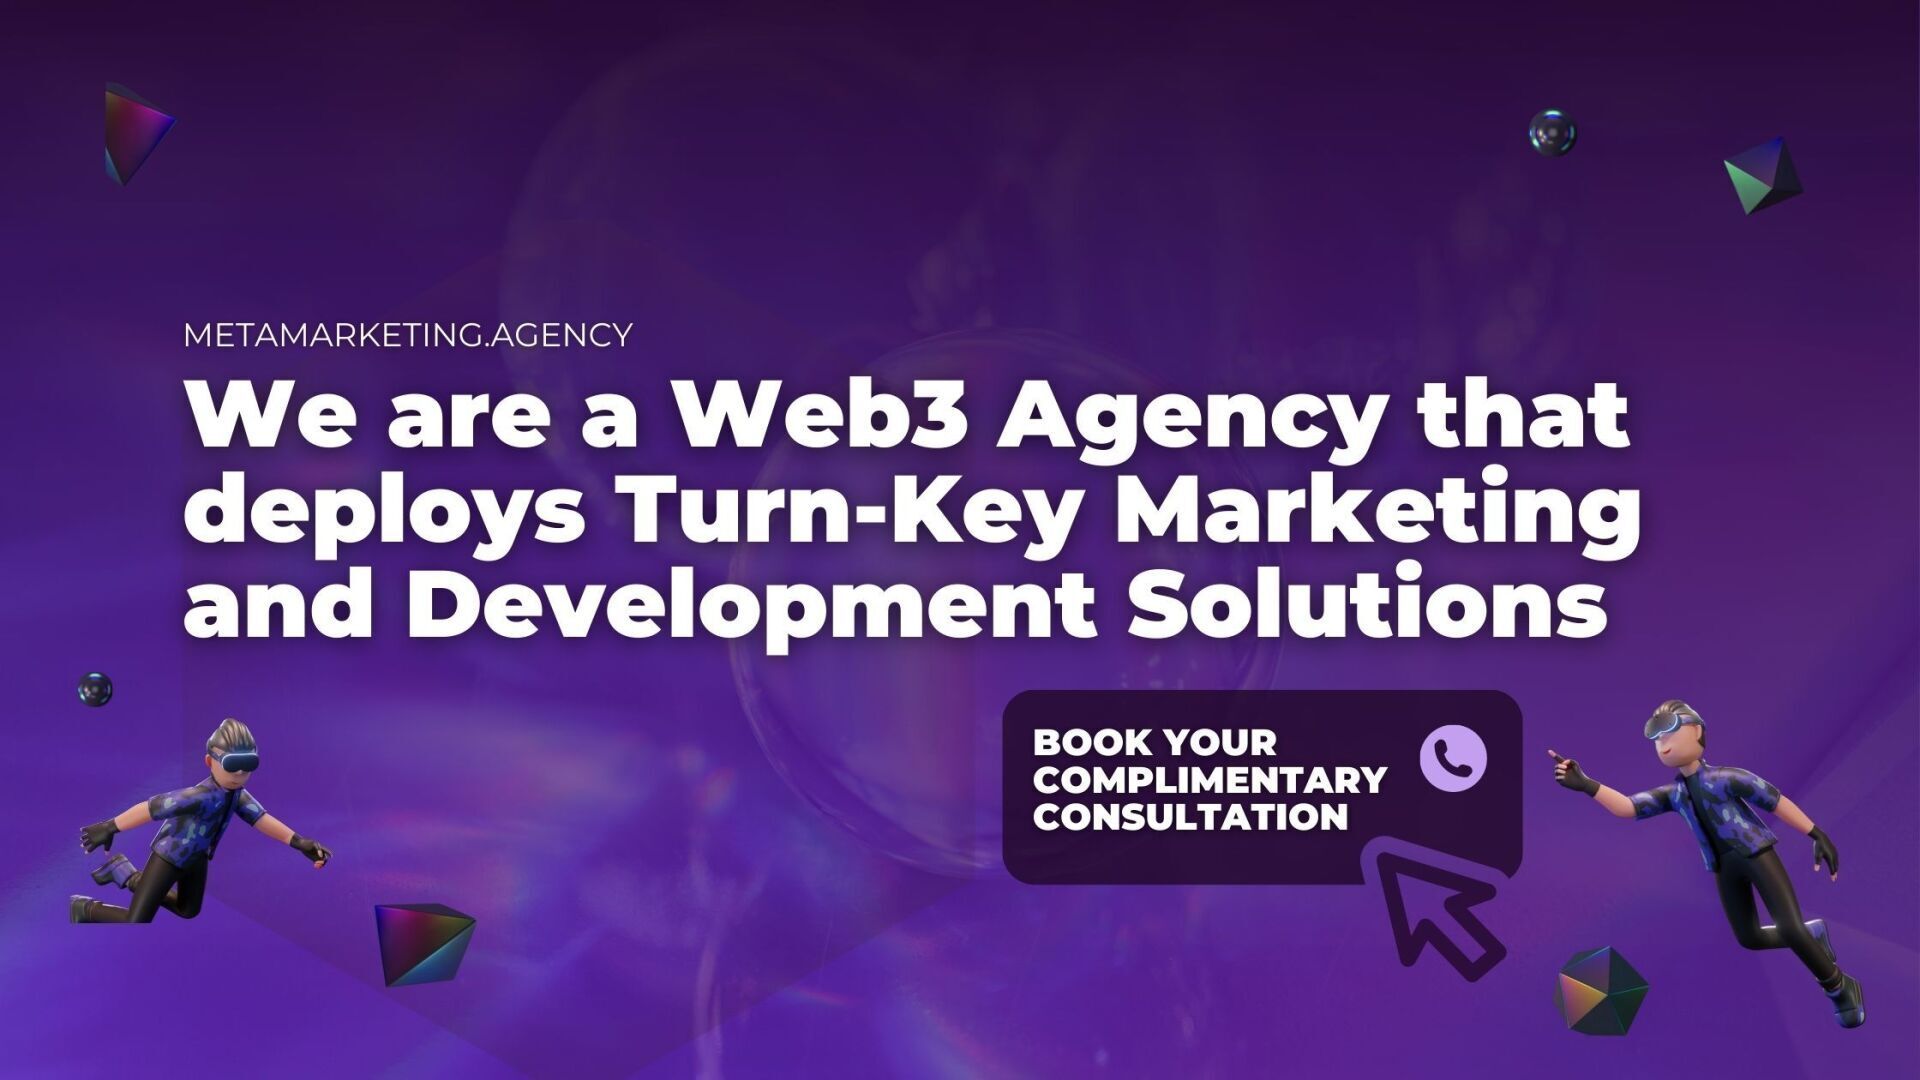 meta marketing is a web3 agency